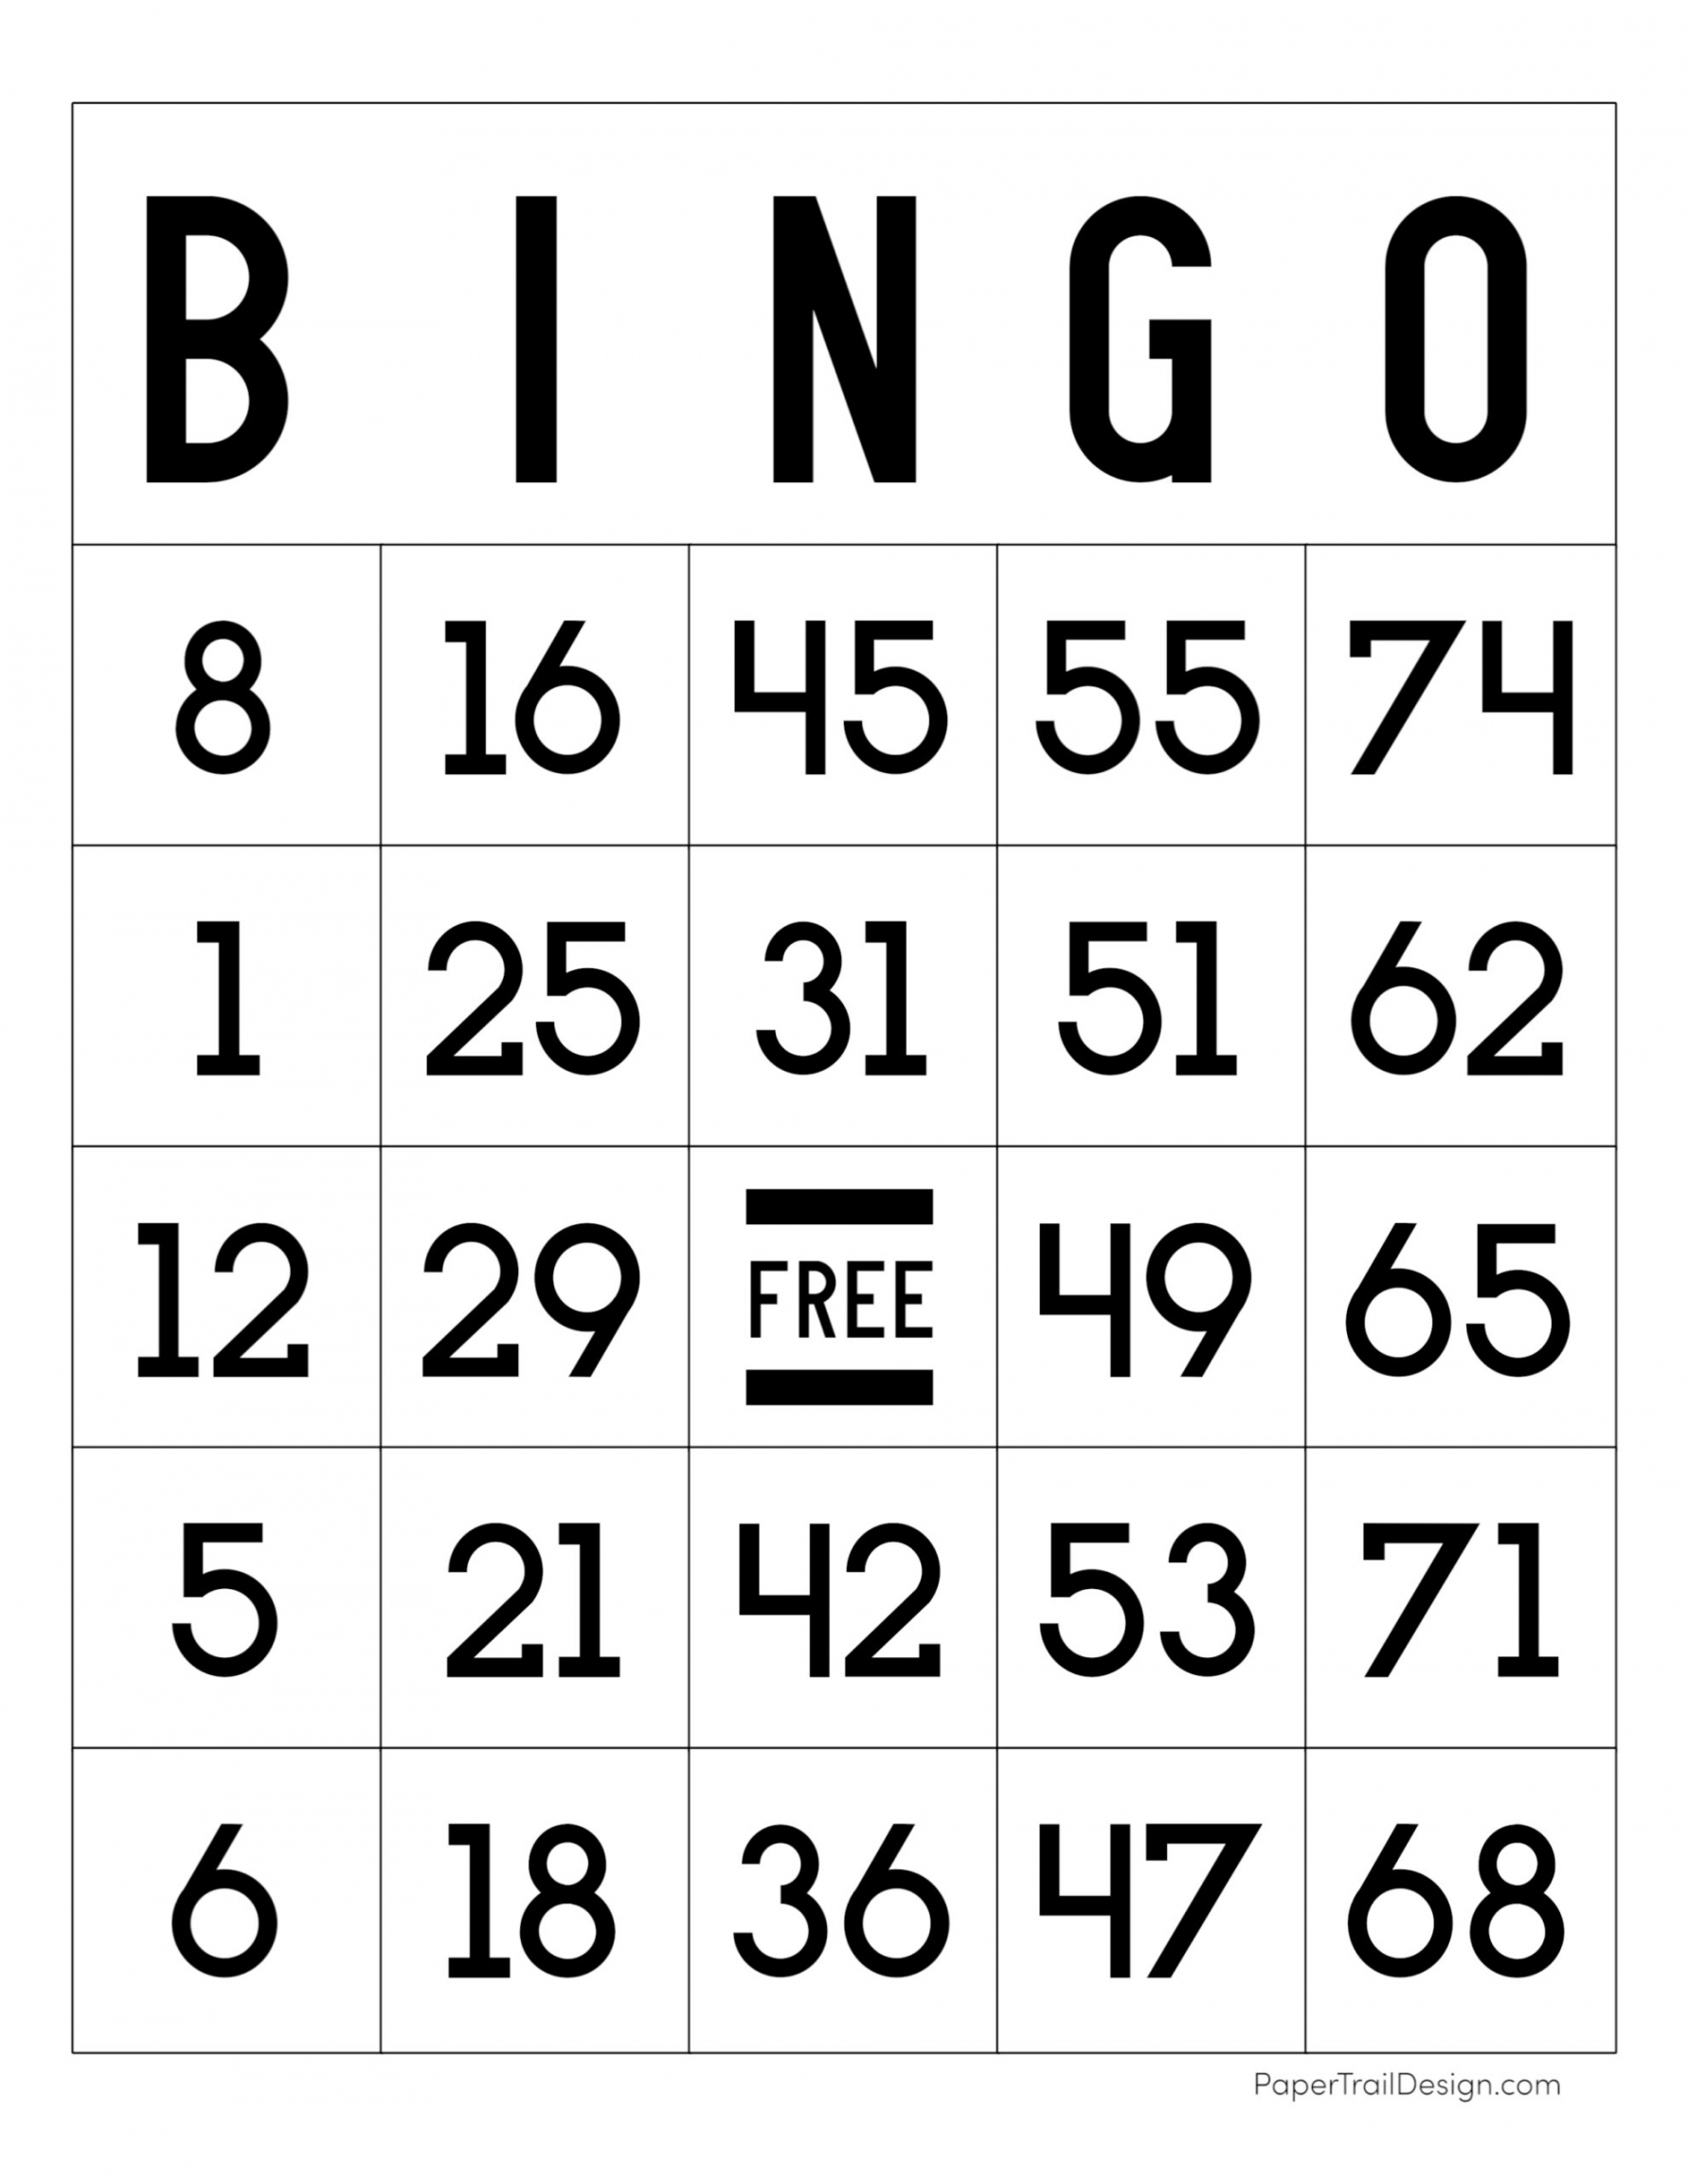 Free Printable Bingo Cards - Paper Trail Design - FREE Printables - Free Printable Bingo Cards With Numbers